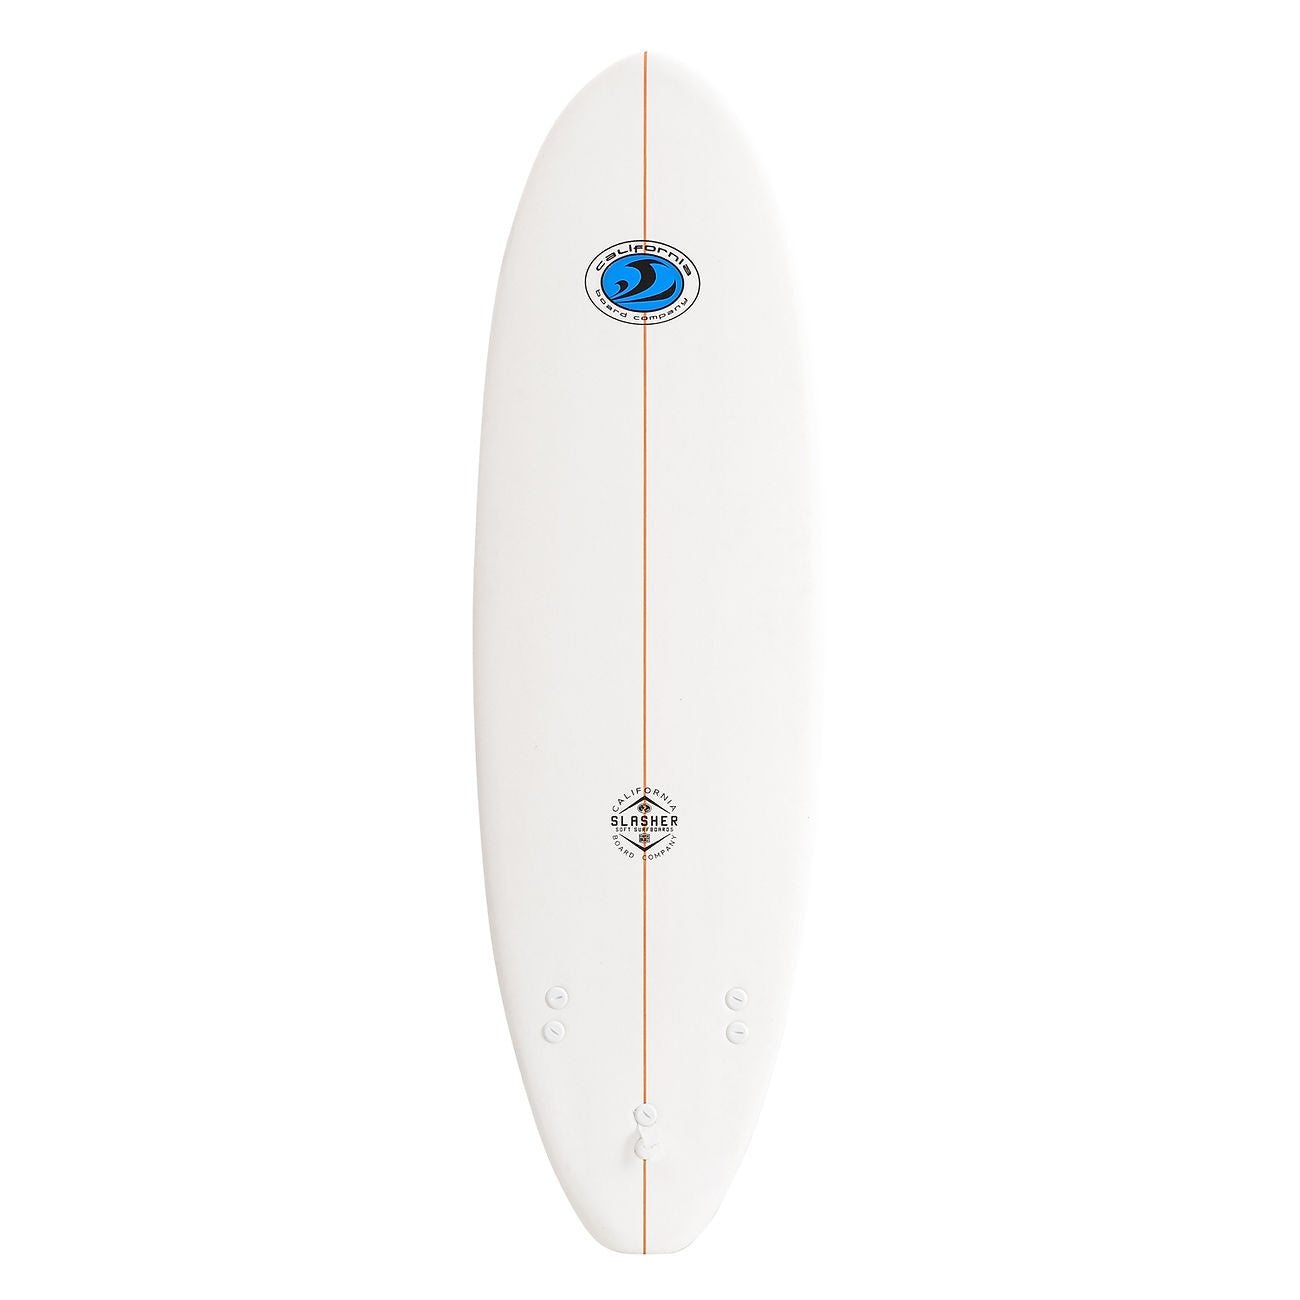 CBC - Foam Surfboard - Softboard Slasher 6'0 - White